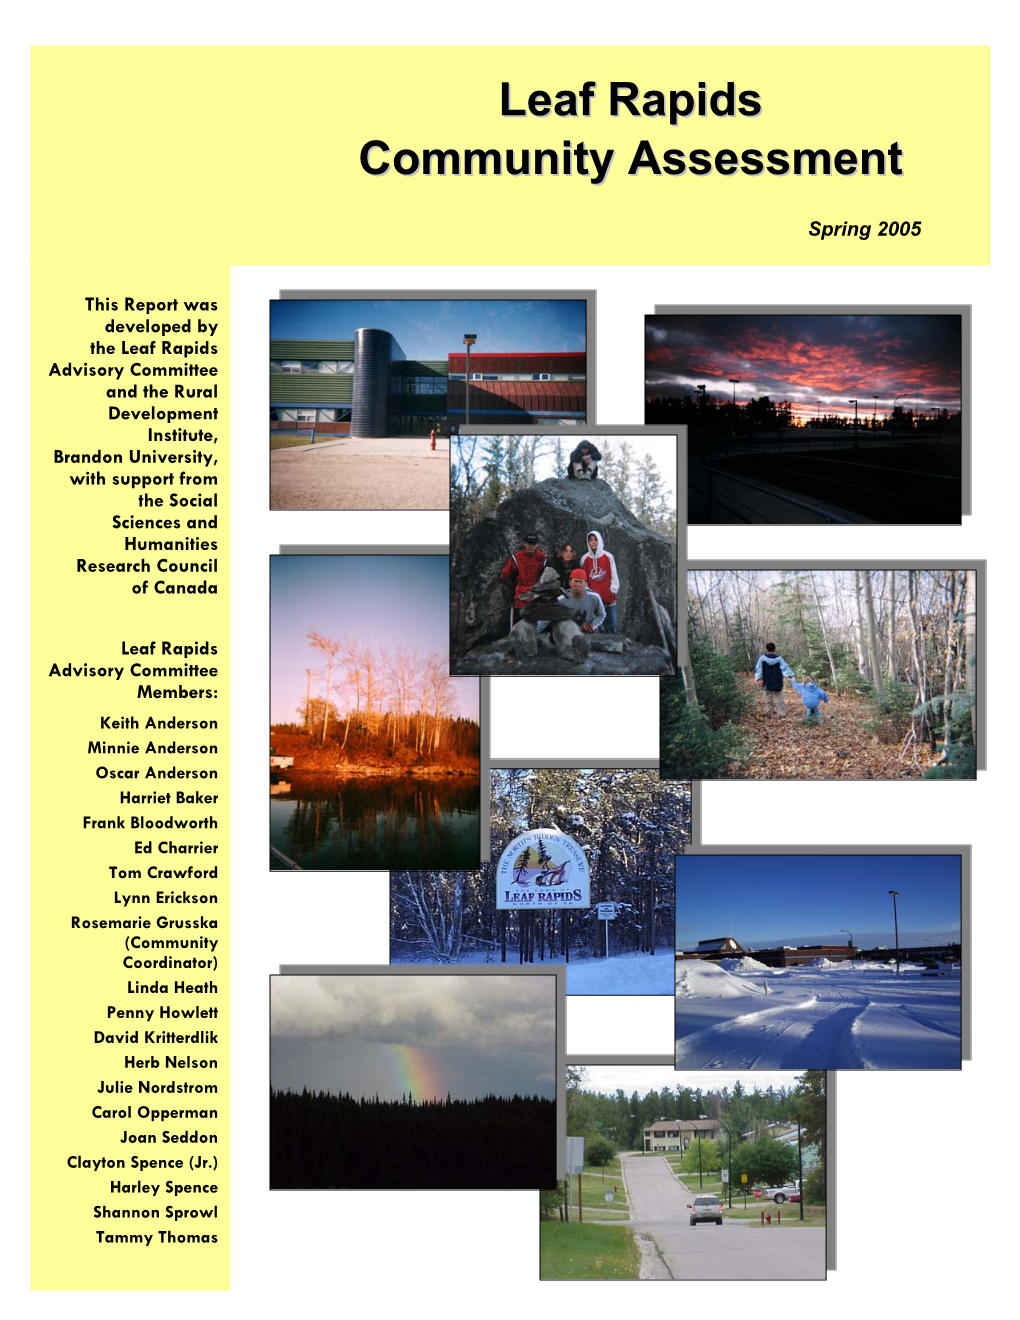 Leaf Rapids Community Assessment Acknowledgements